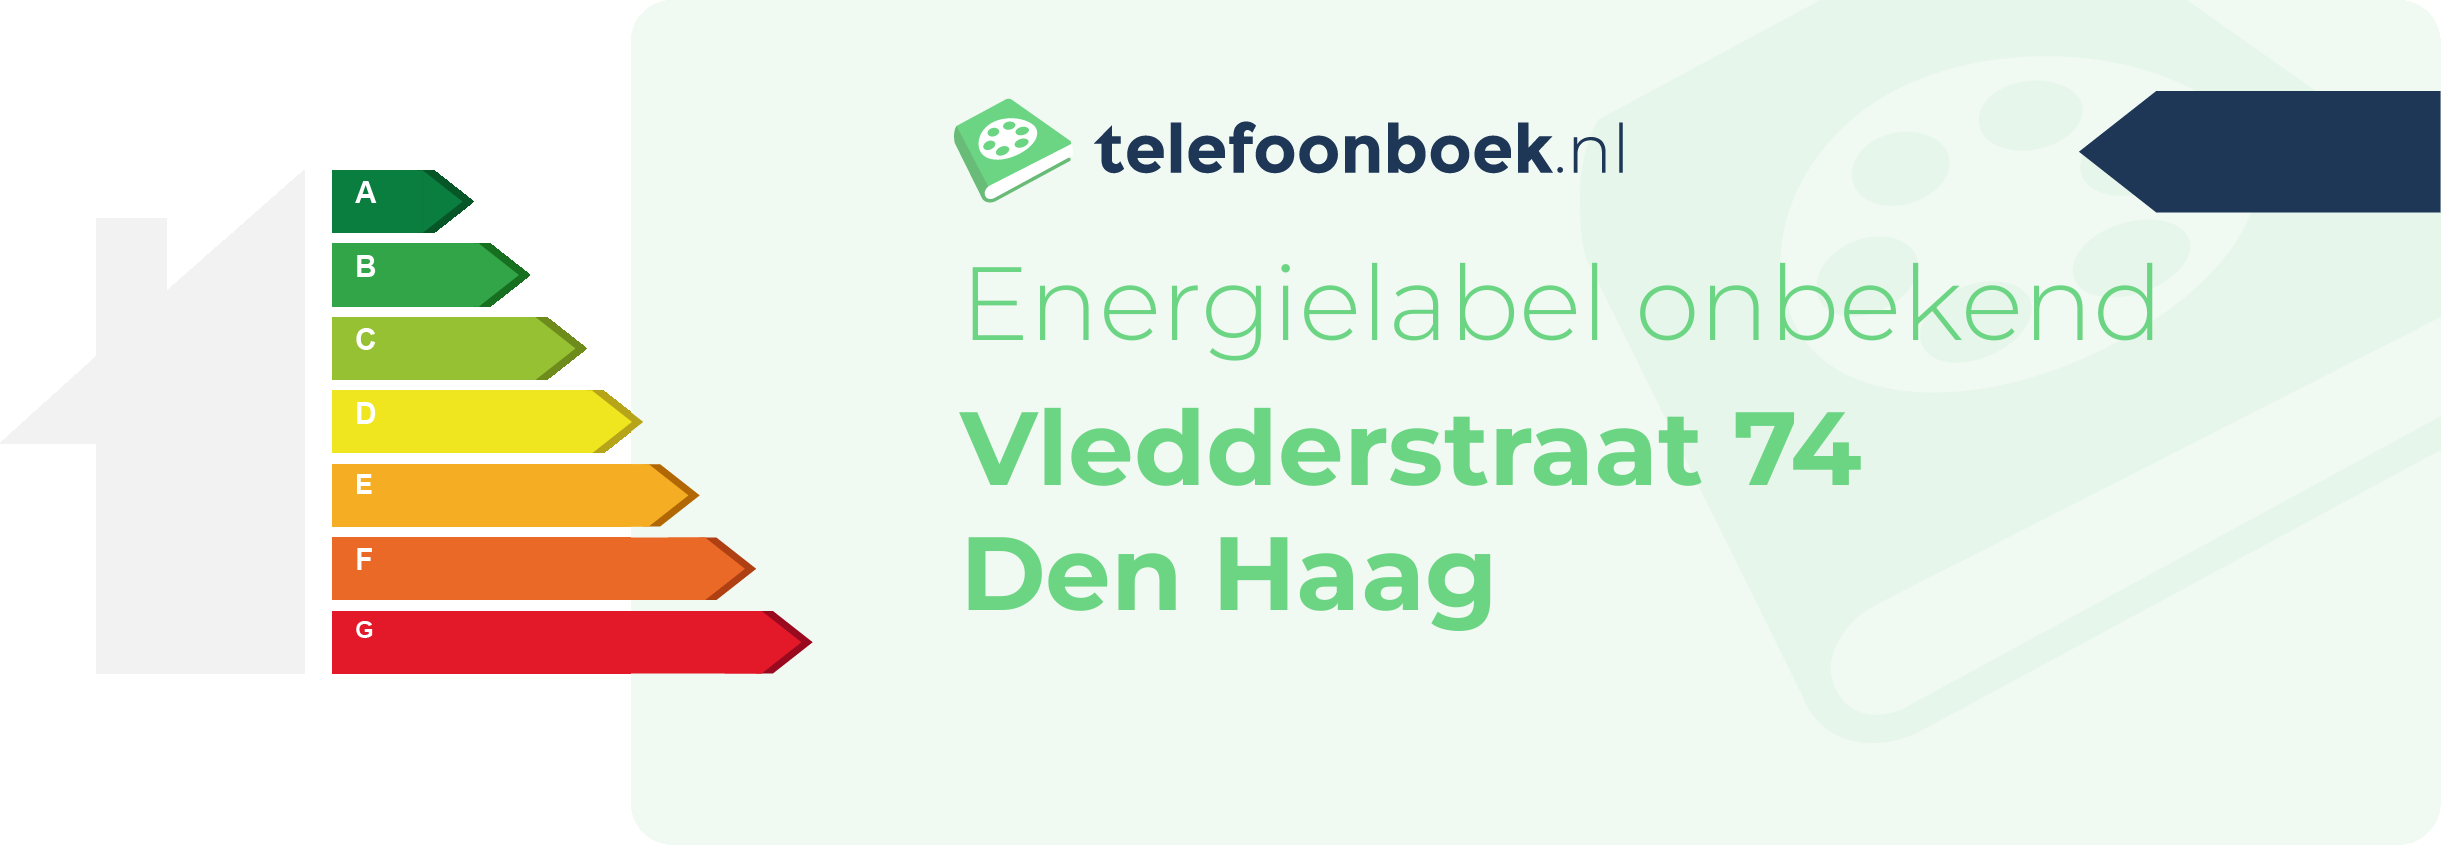 Energielabel Vledderstraat 74 Den Haag